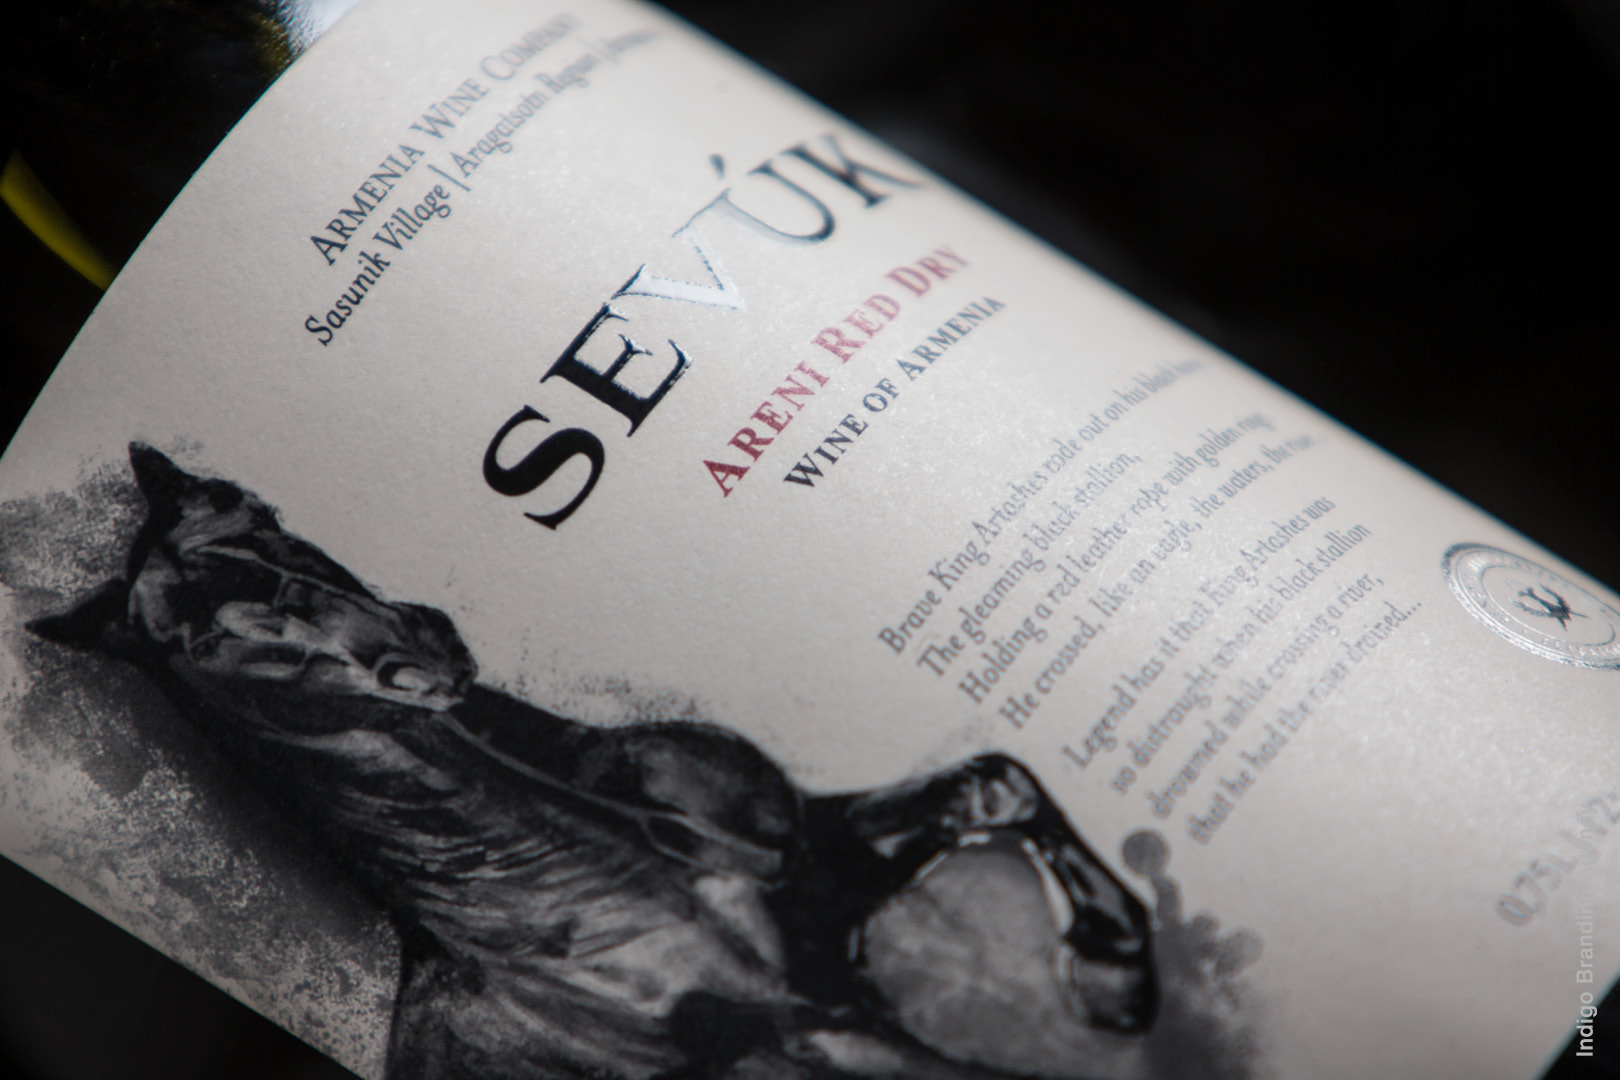 Sevuk Wines branding and labeling by Indigo branding